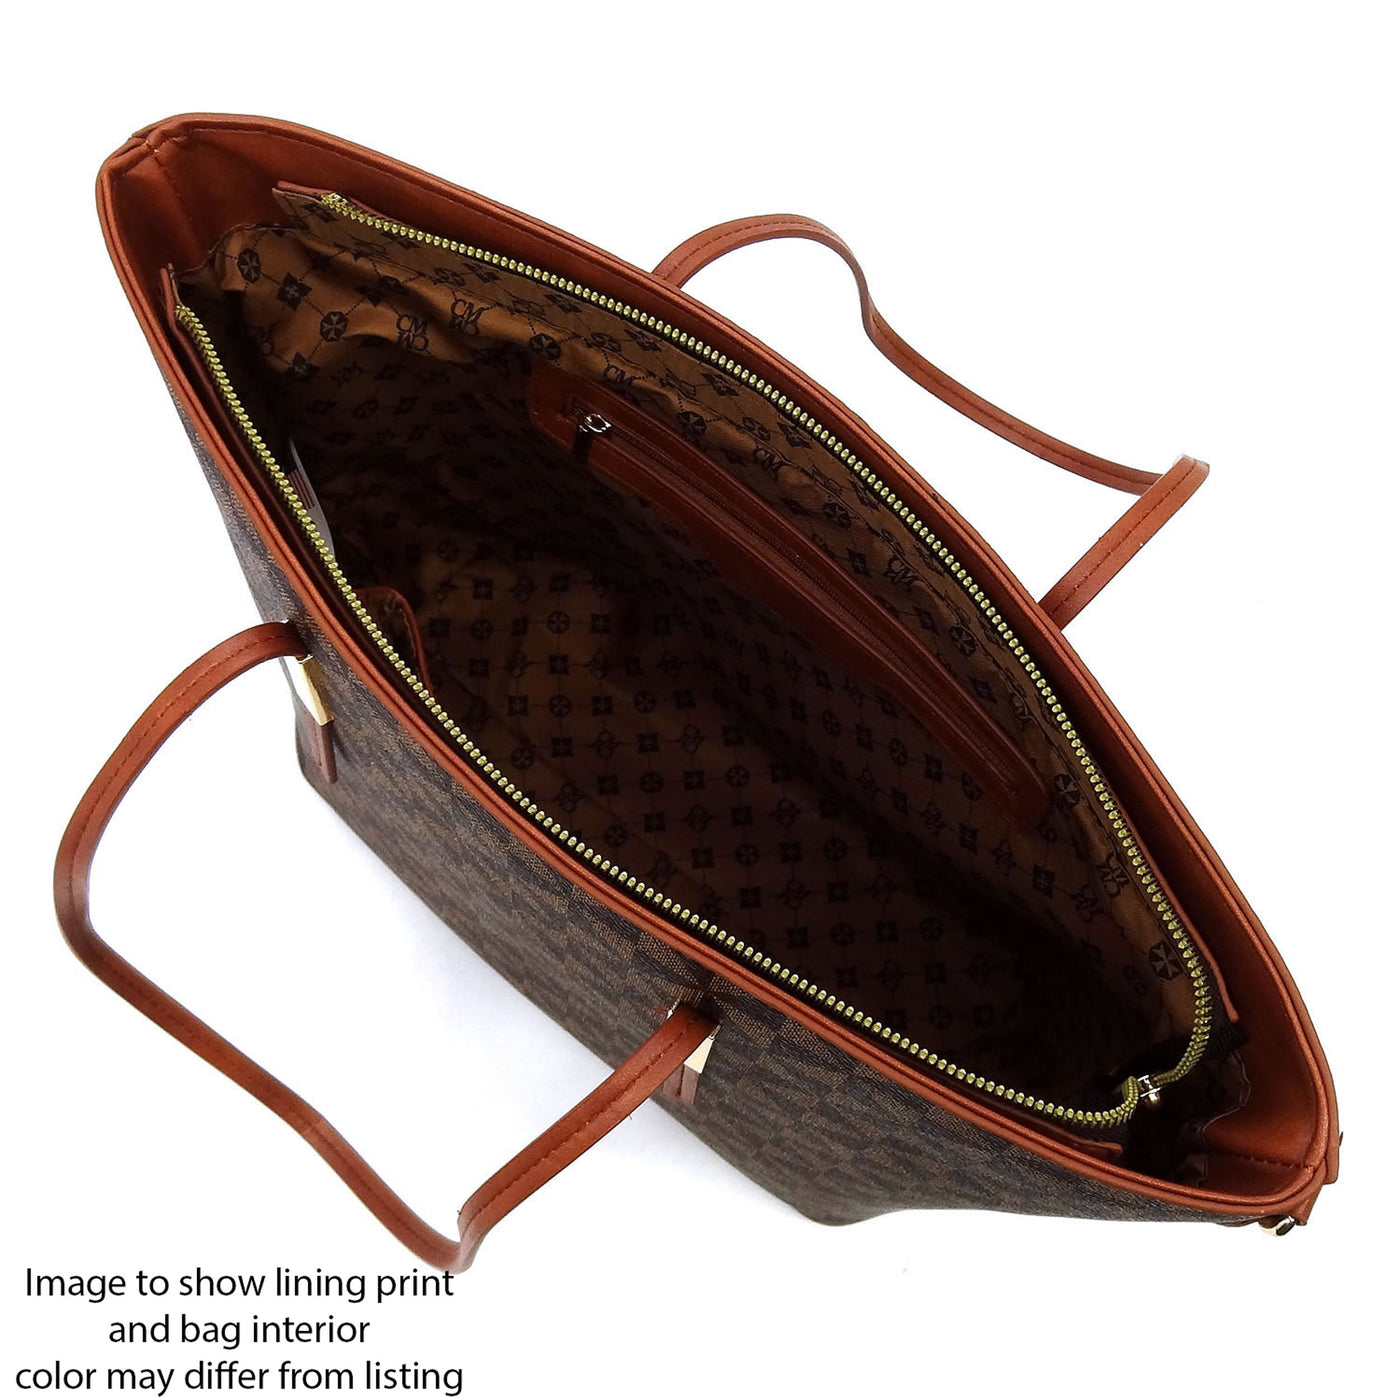 Ashley Handbag/Wallet Set - Ivory